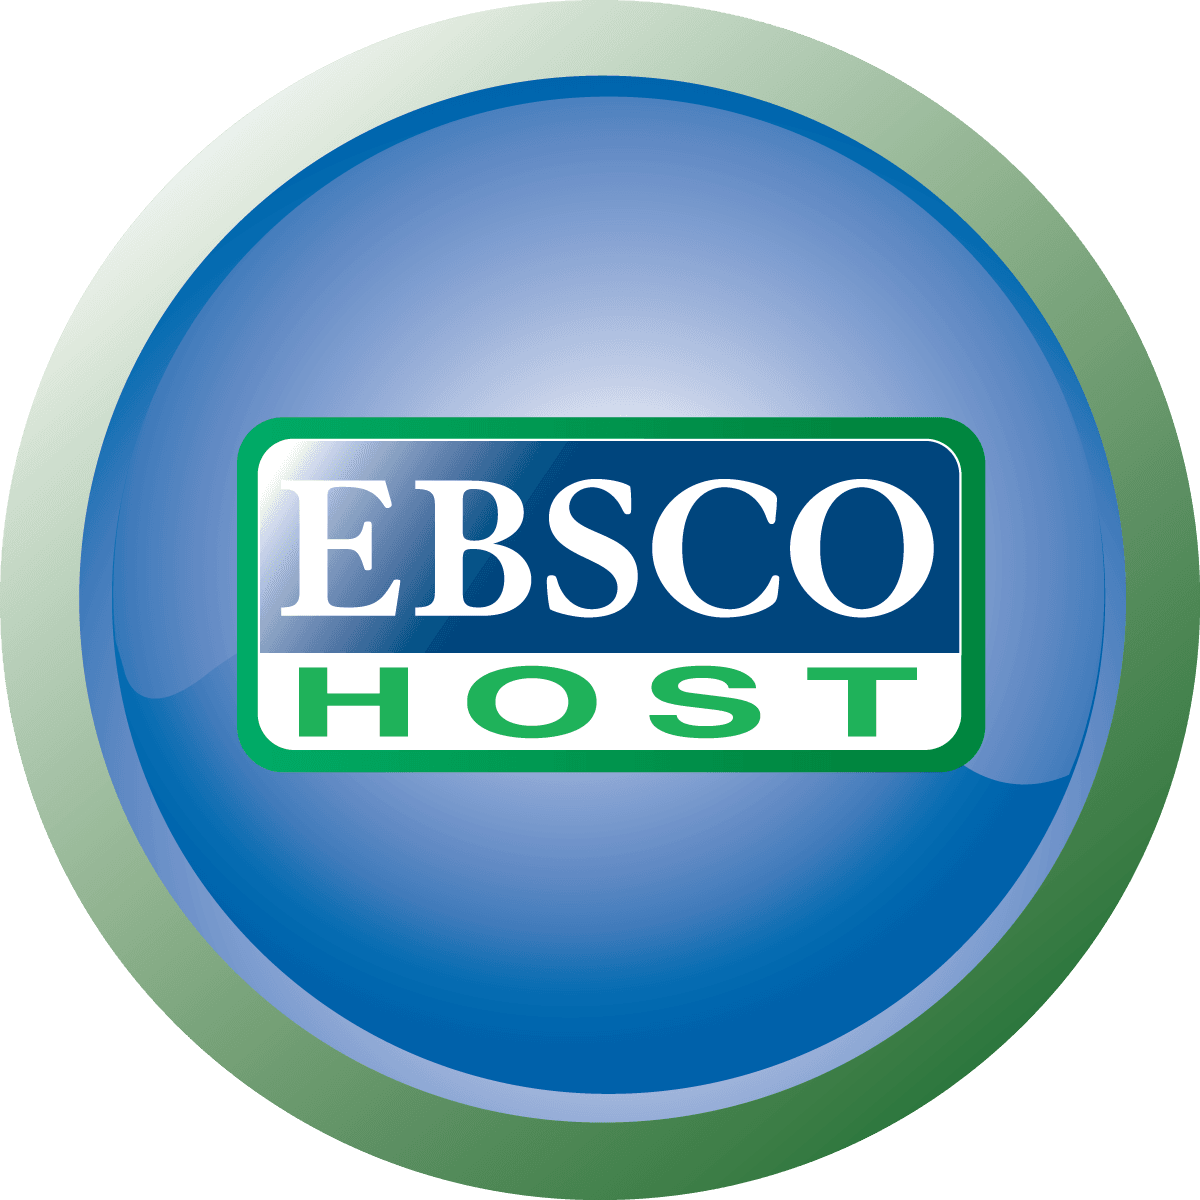 EBSCO
logo